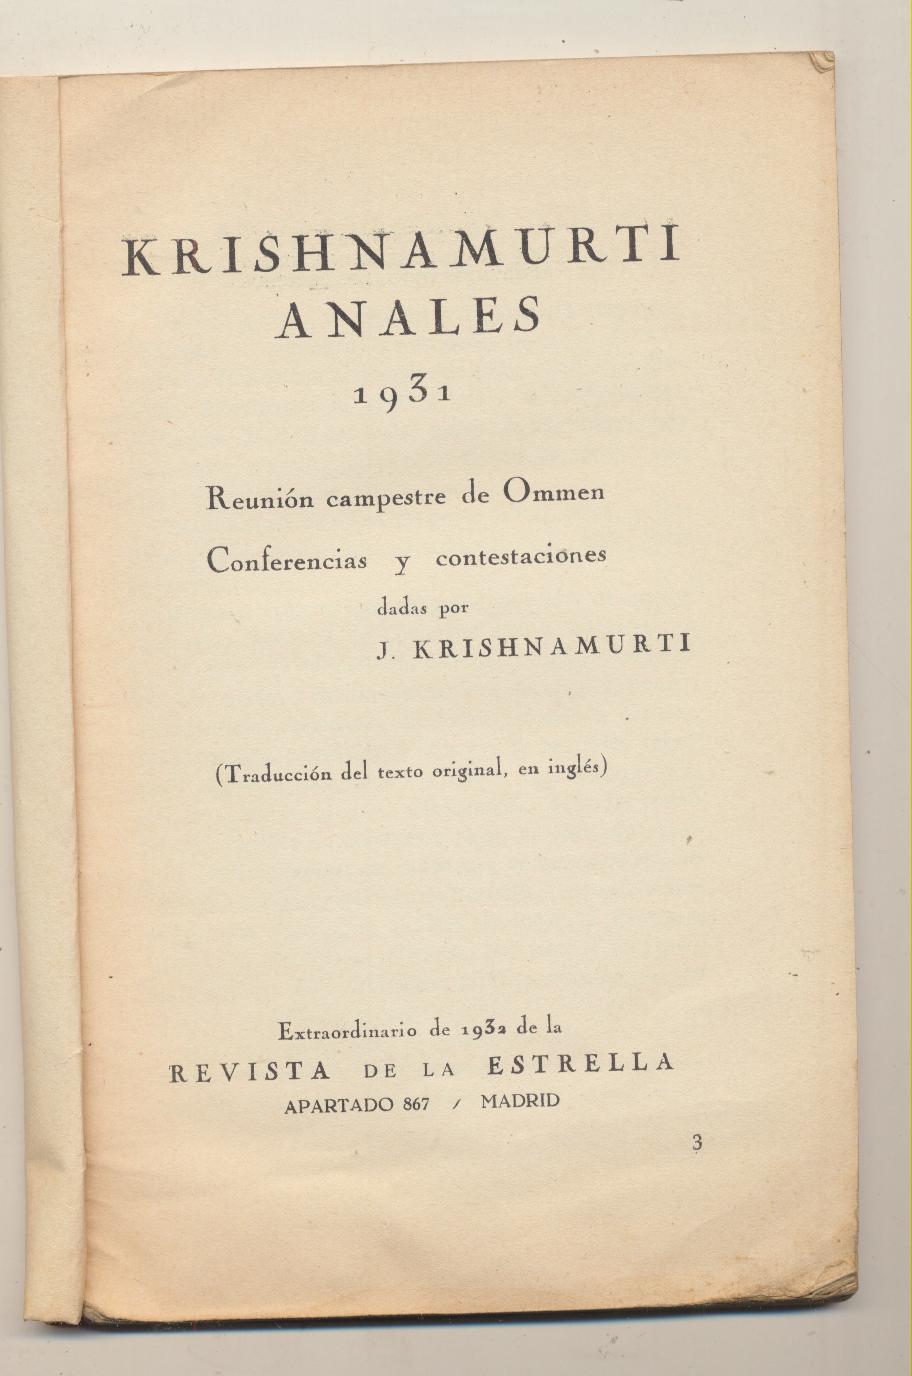 Krishnamurti Anales 1931. Reunión Campestre de Ommen